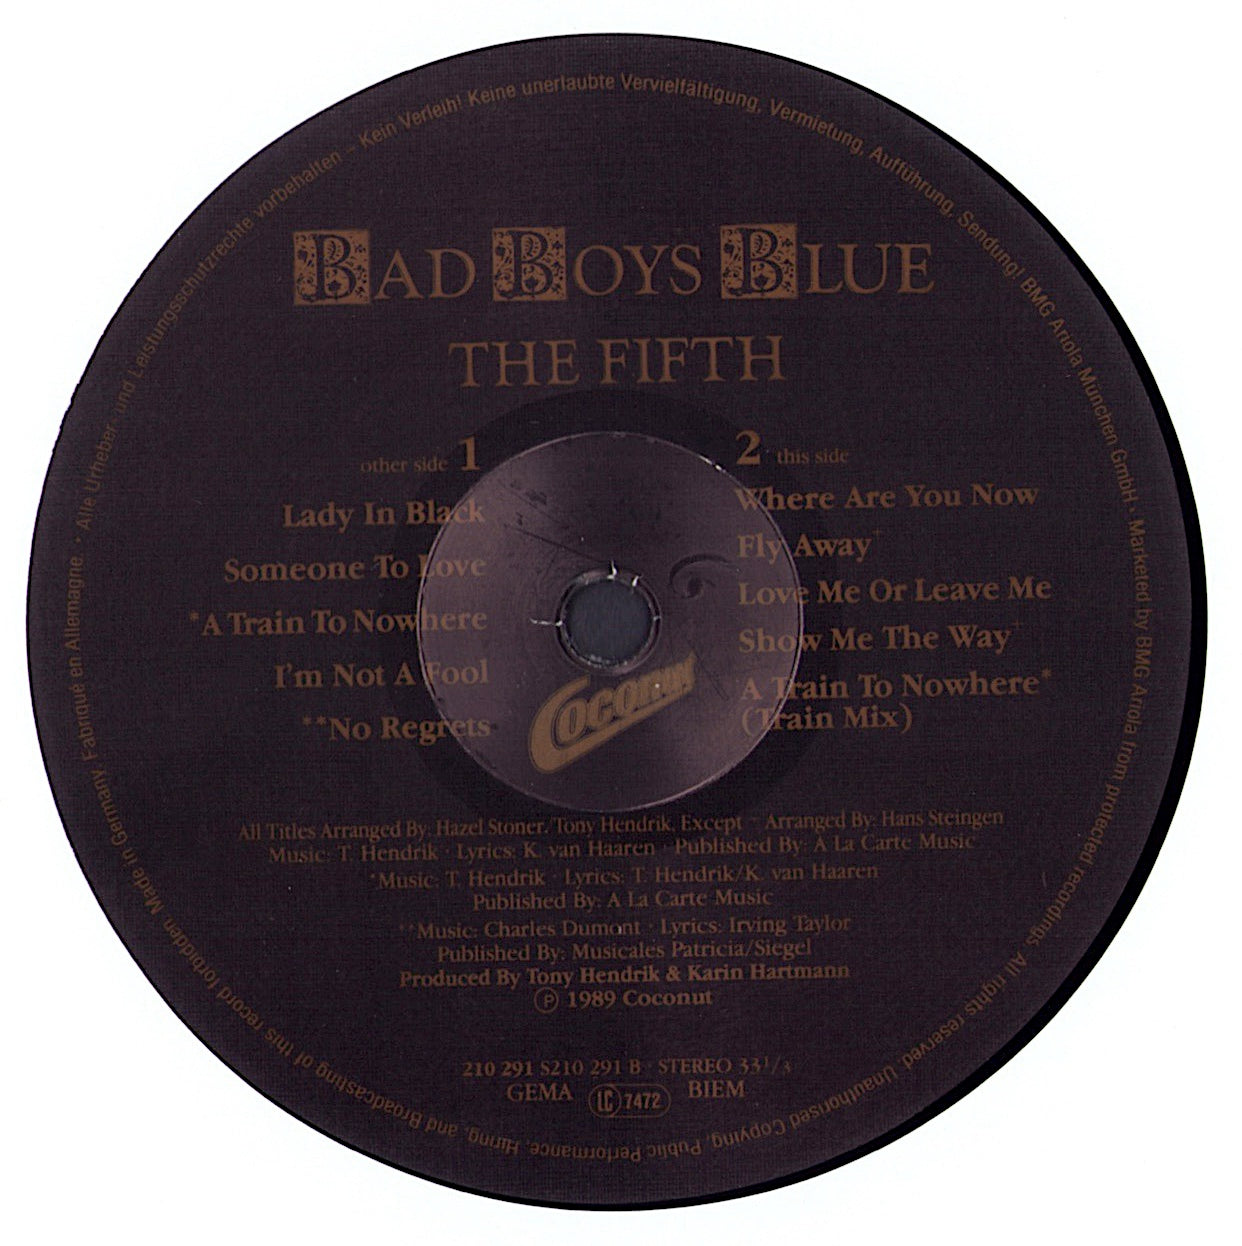 Bad Boys Blue - The Fifth Vinyl LP